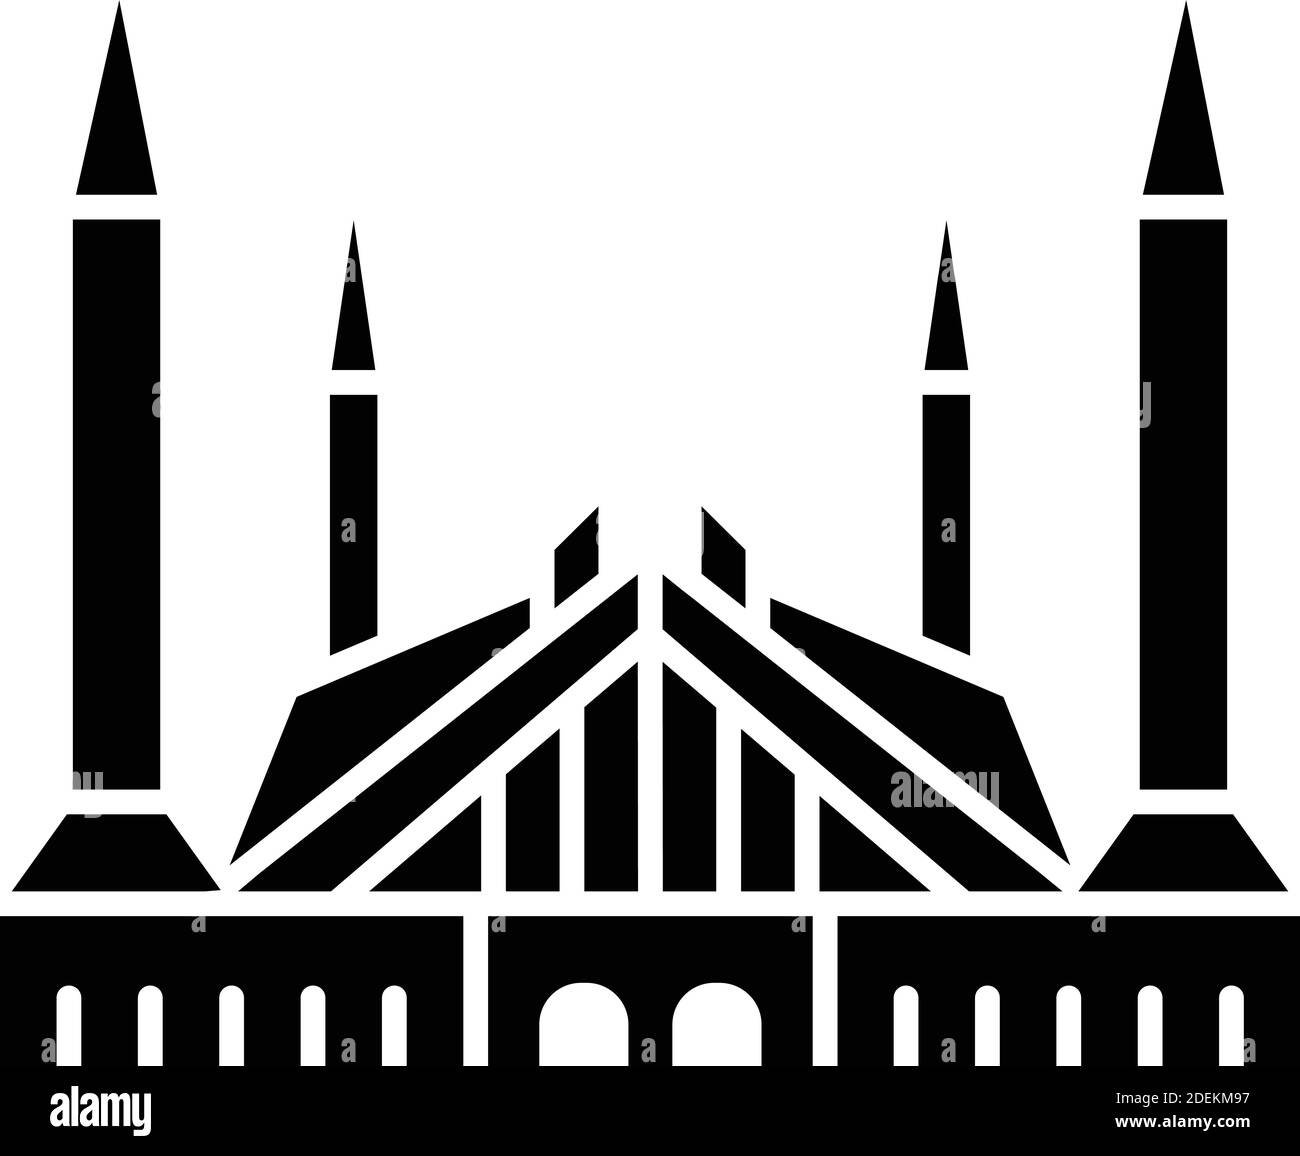 faisal mosque clipart images